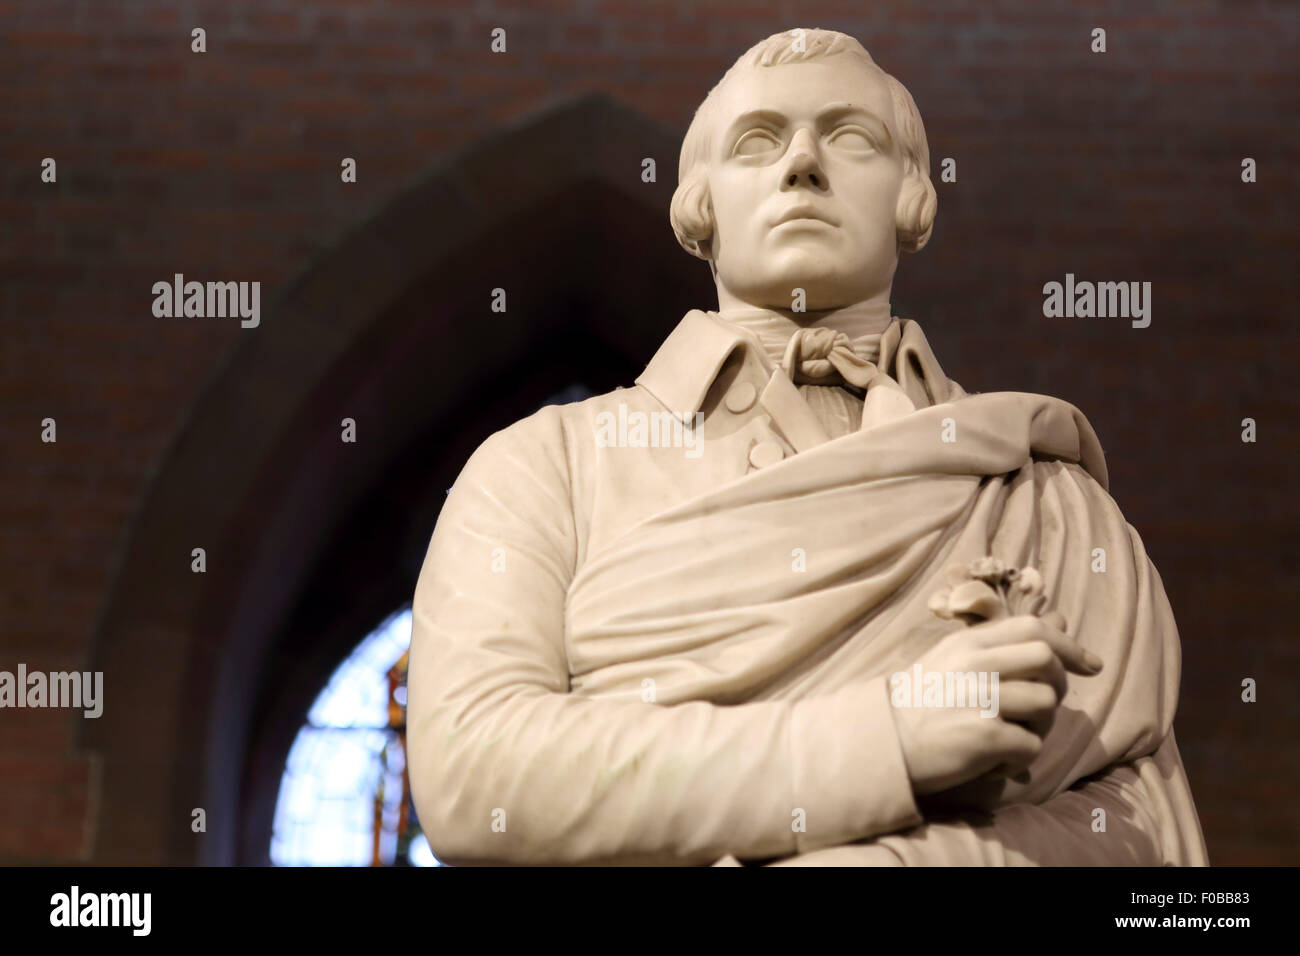 Estatua de Robert Burns en Edimburgo, Escocia. Burns (1759 - 1796) es considerado como el poeta nacional de Escocia. Foto de stock